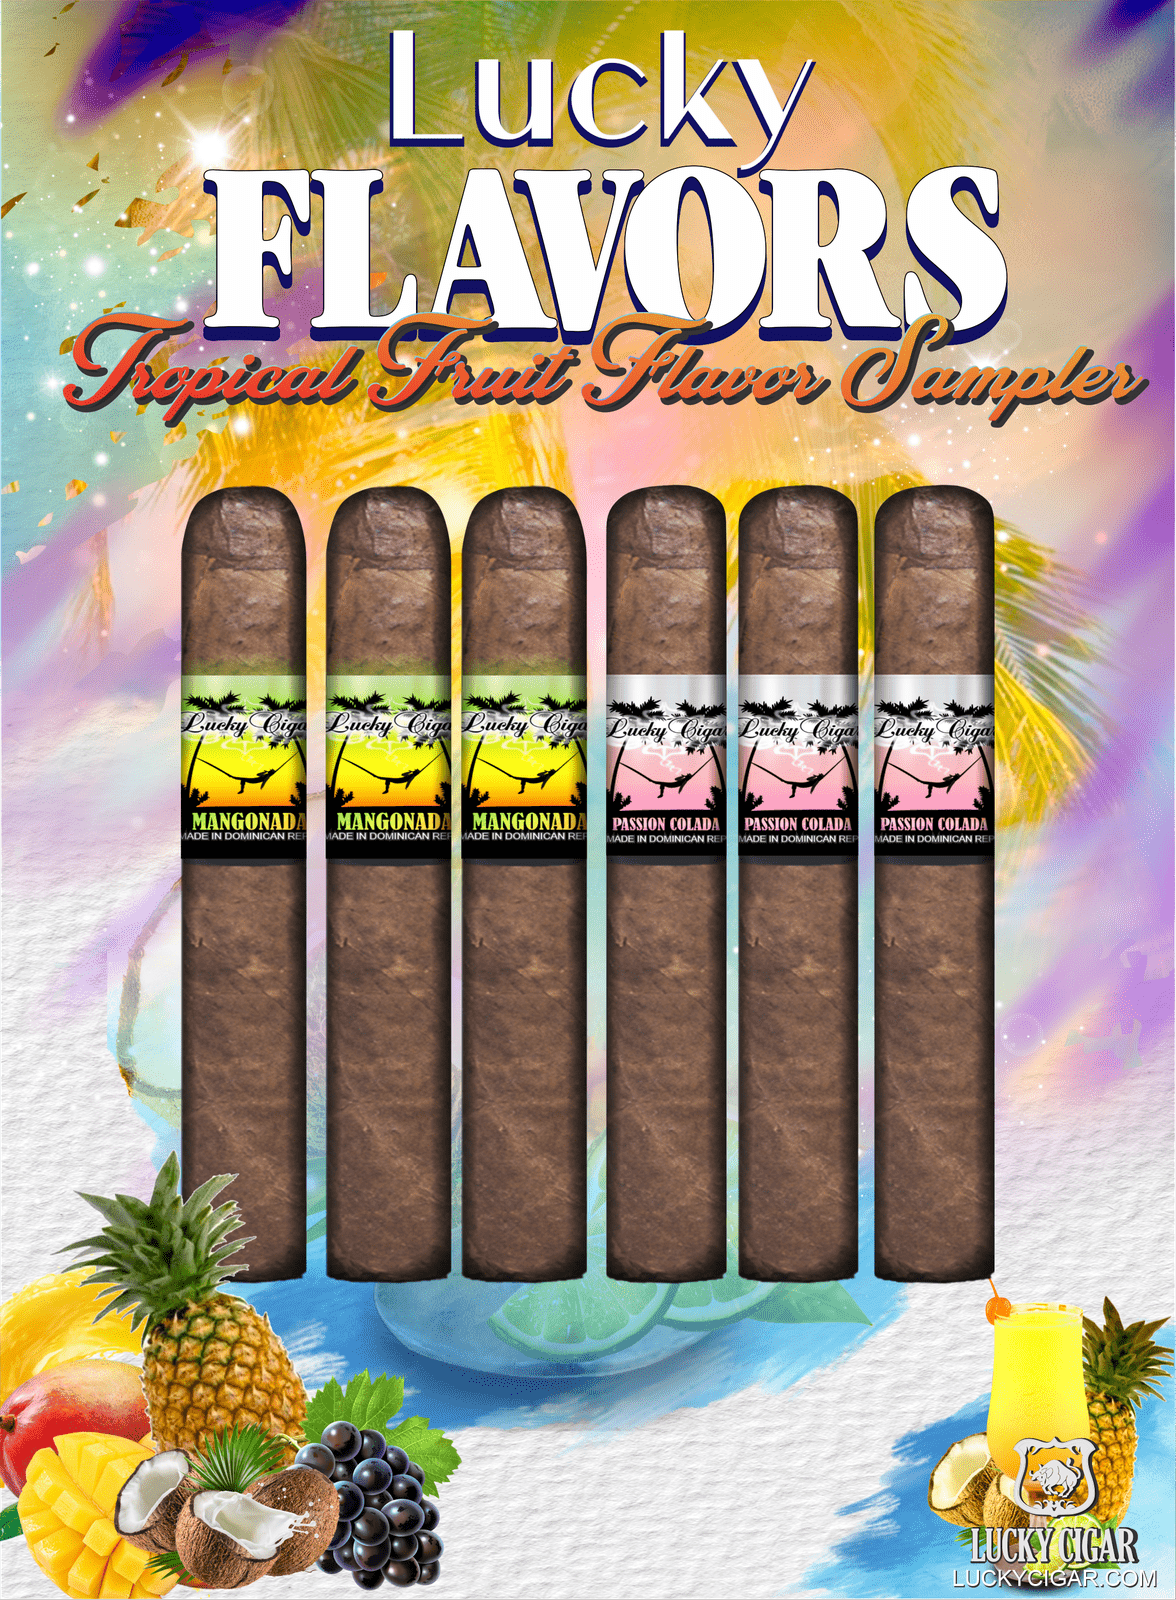 Flavored Cigars: Lucky Flavors 6 Piece Tropical Fruit Sampler - Mangonada, Passion Colada